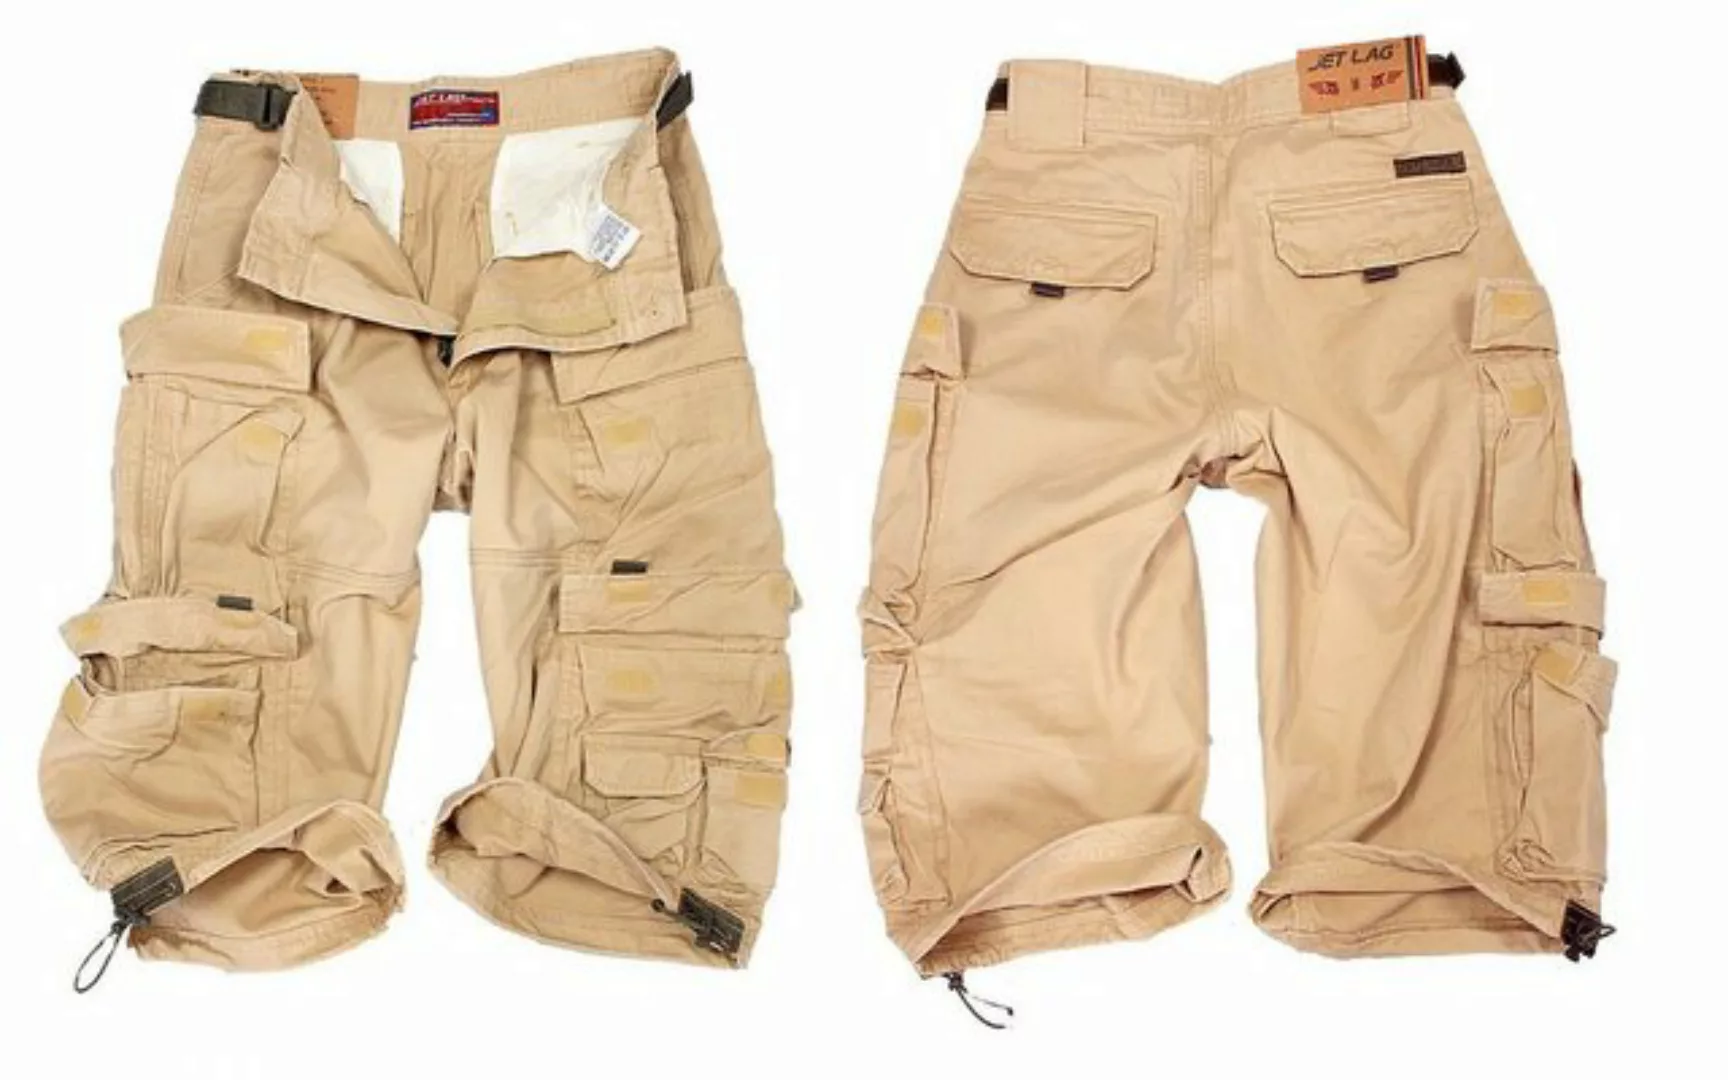 Jet Lag Shorts Cargo Shorts Kurze Hose Lang Short Bermuda 3 /4 Sommer 007B günstig online kaufen